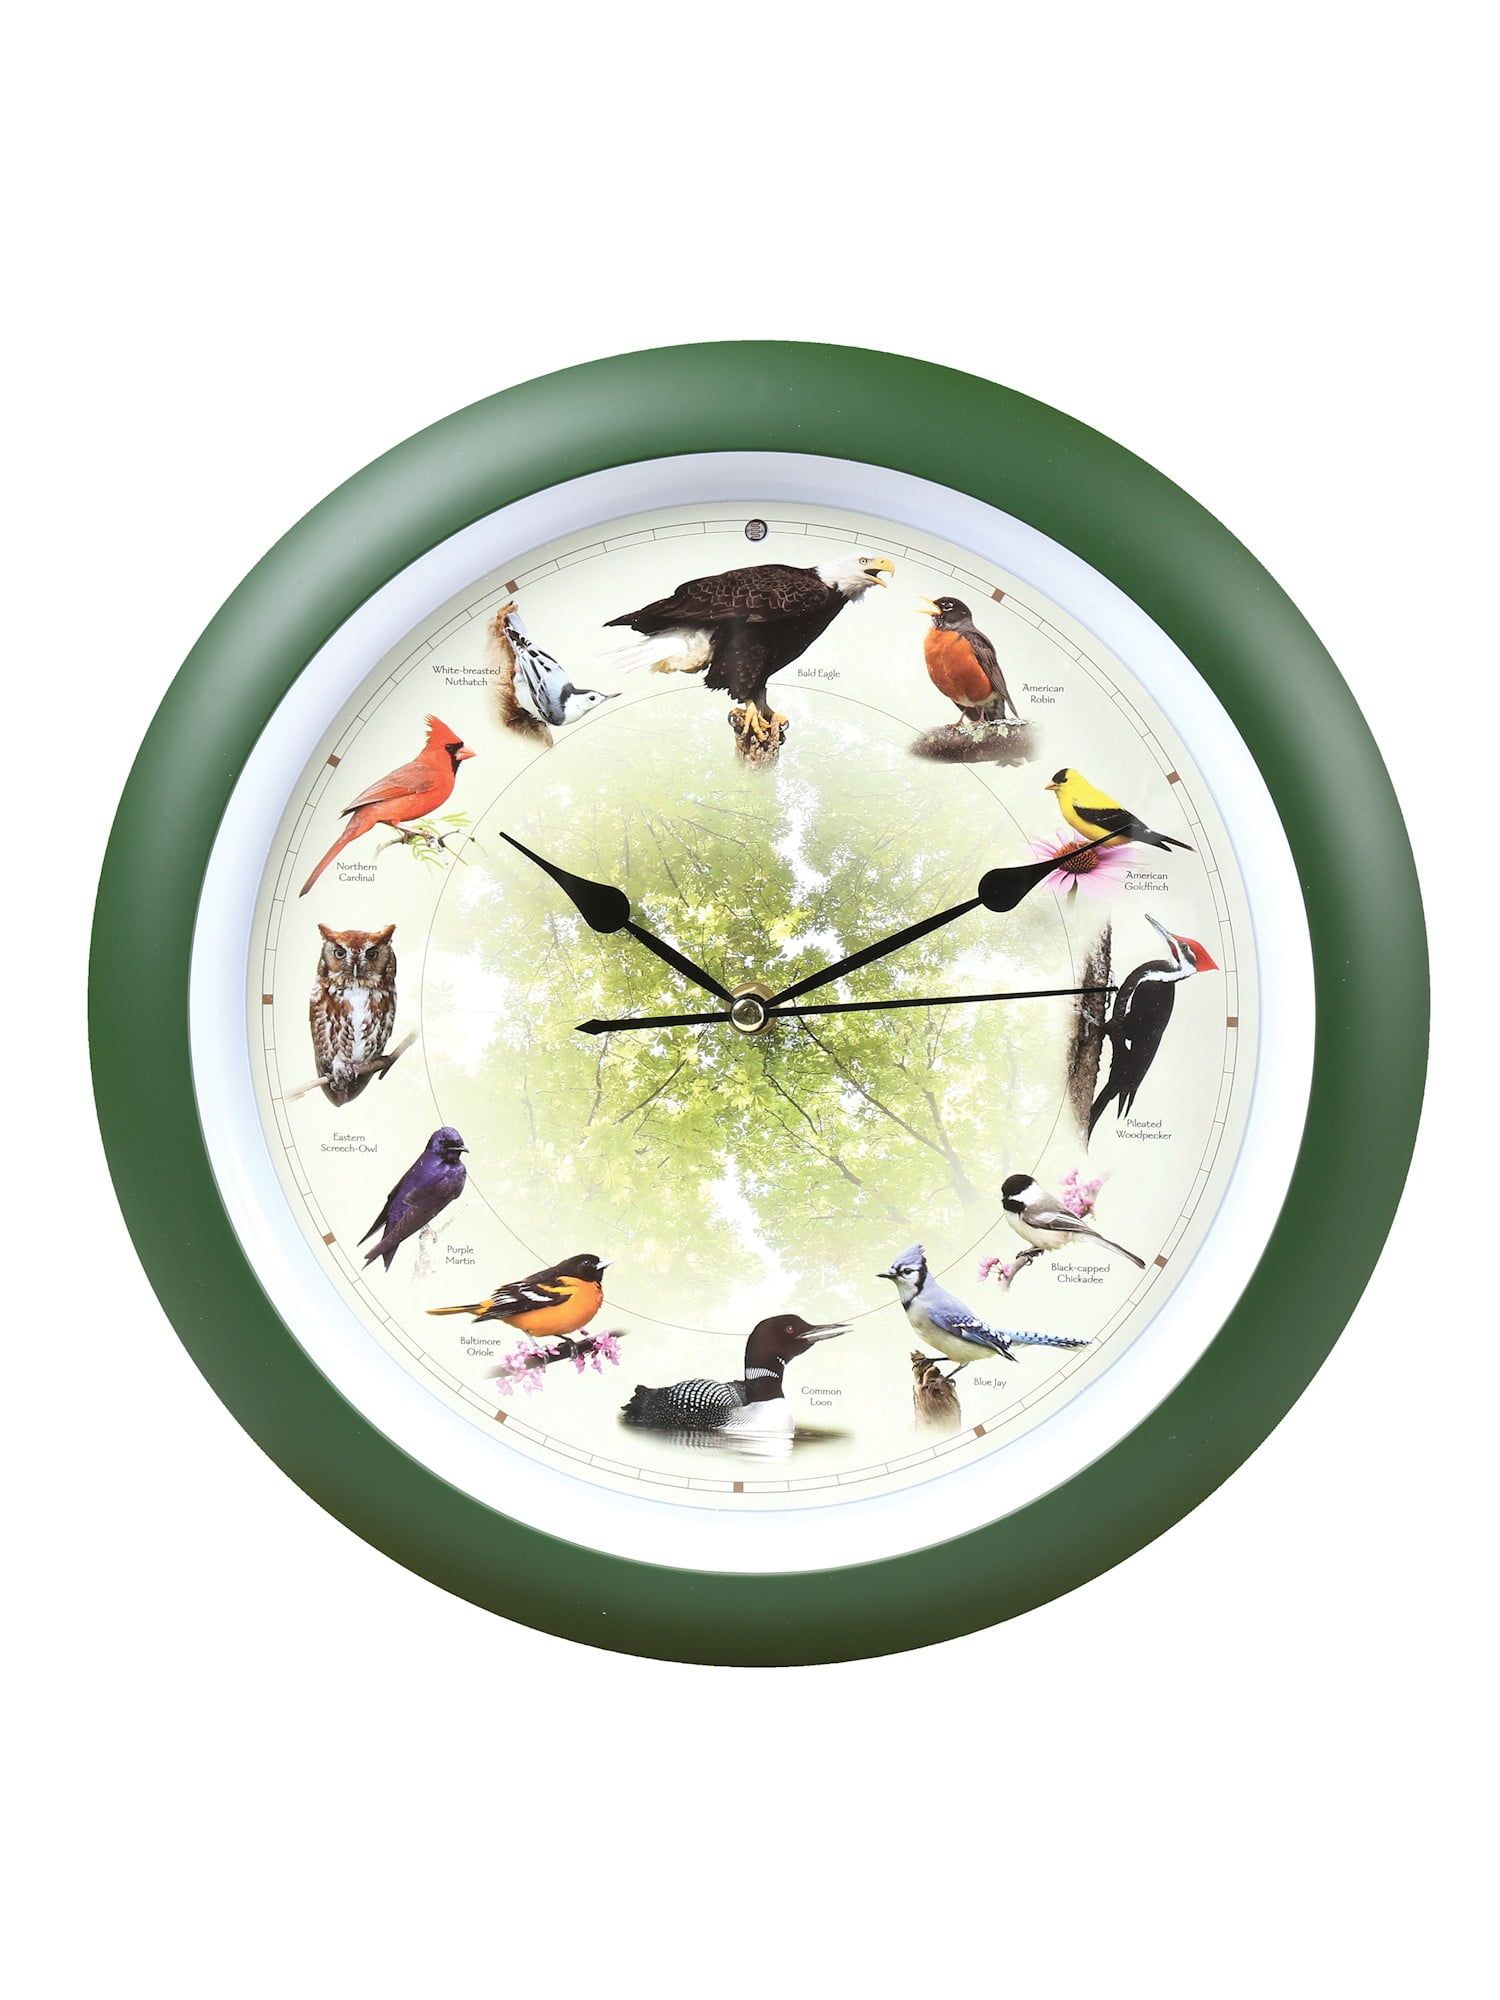 10.5" SANDHILL CRANE BIRDS CLOCK Large 10.5" Wall Clock Home Décor Clock 3116 